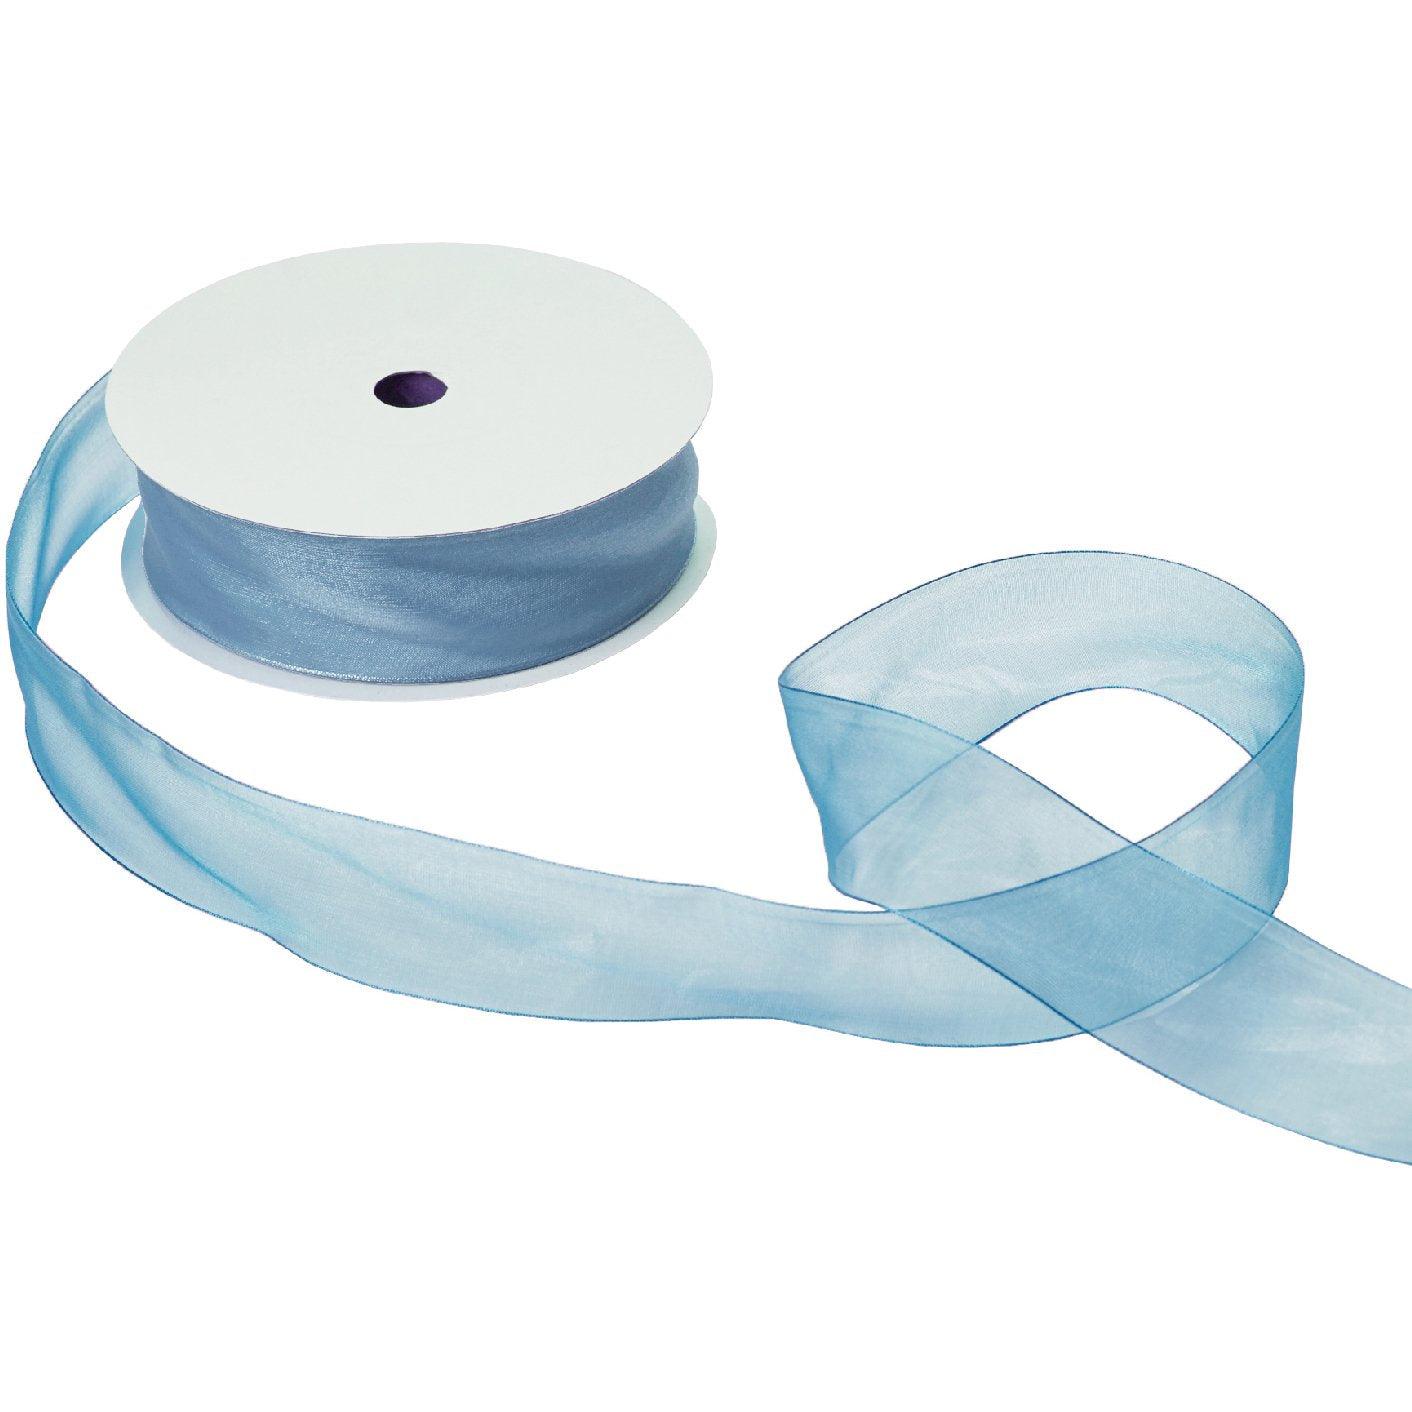 Jillson & Roberts Organdy Sheer Ribbon, 1 1/2" Wide x 100 Yards, Pastel Blue by Present Paper - Vysn